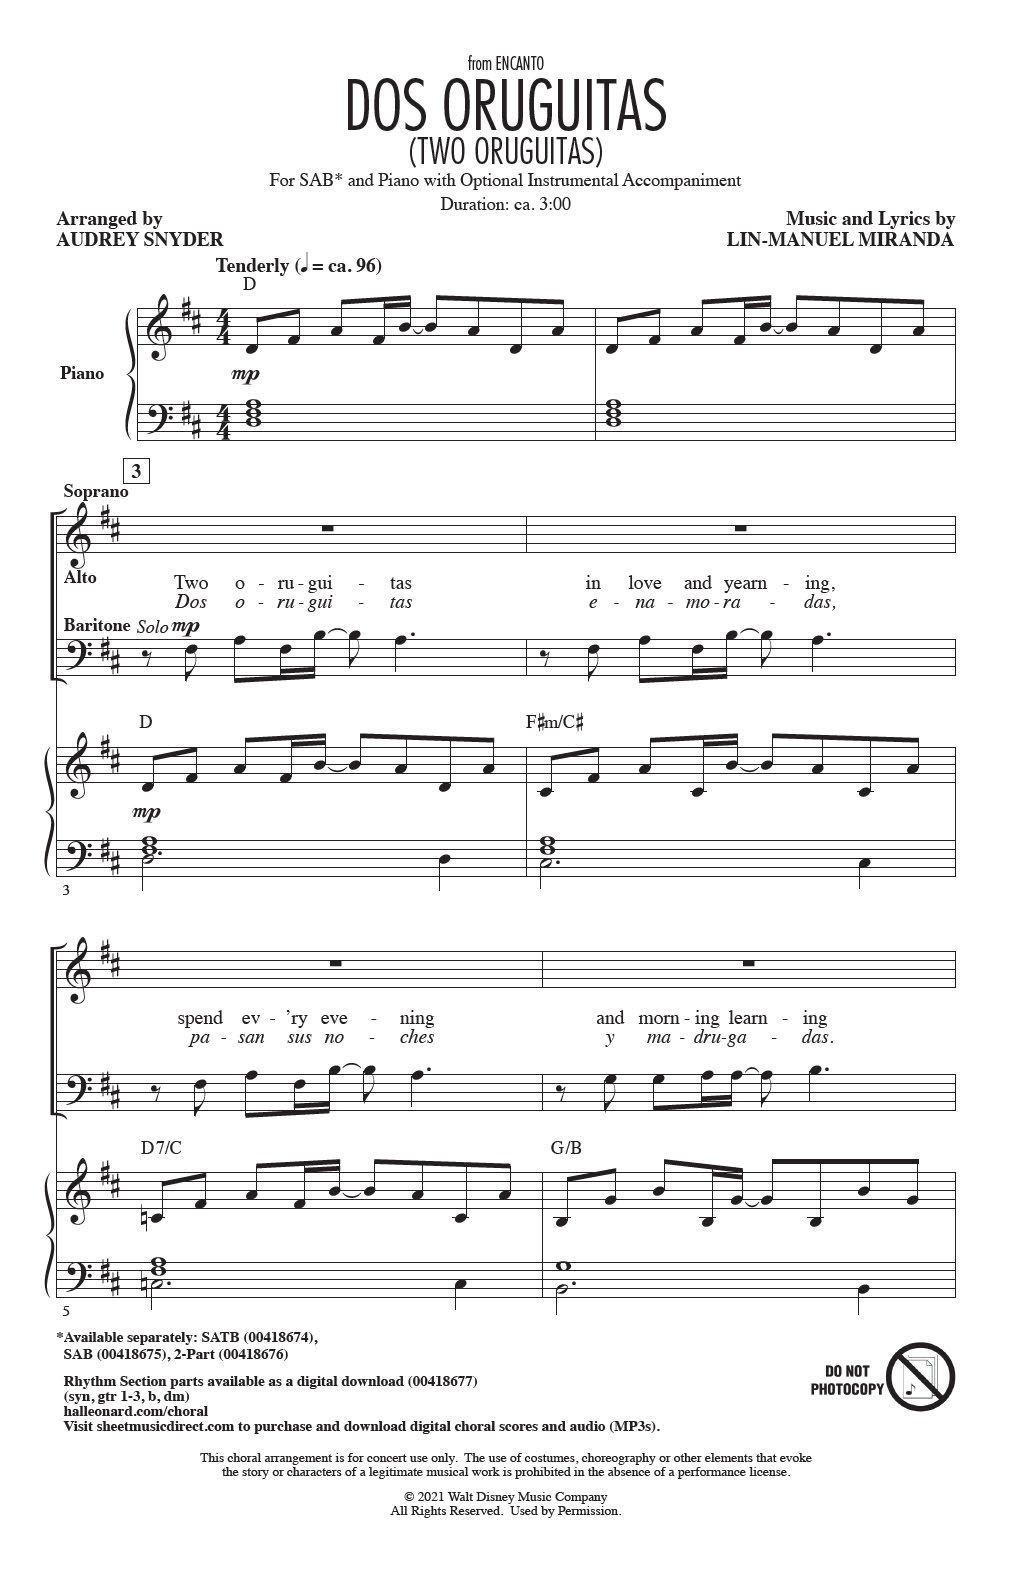 Lin-Manuel Miranda Dos Oruguitas (from Encanto) (arr. Audrey Snyder) Sheet Music Notes & Chords for 2-Part Choir - Download or Print PDF